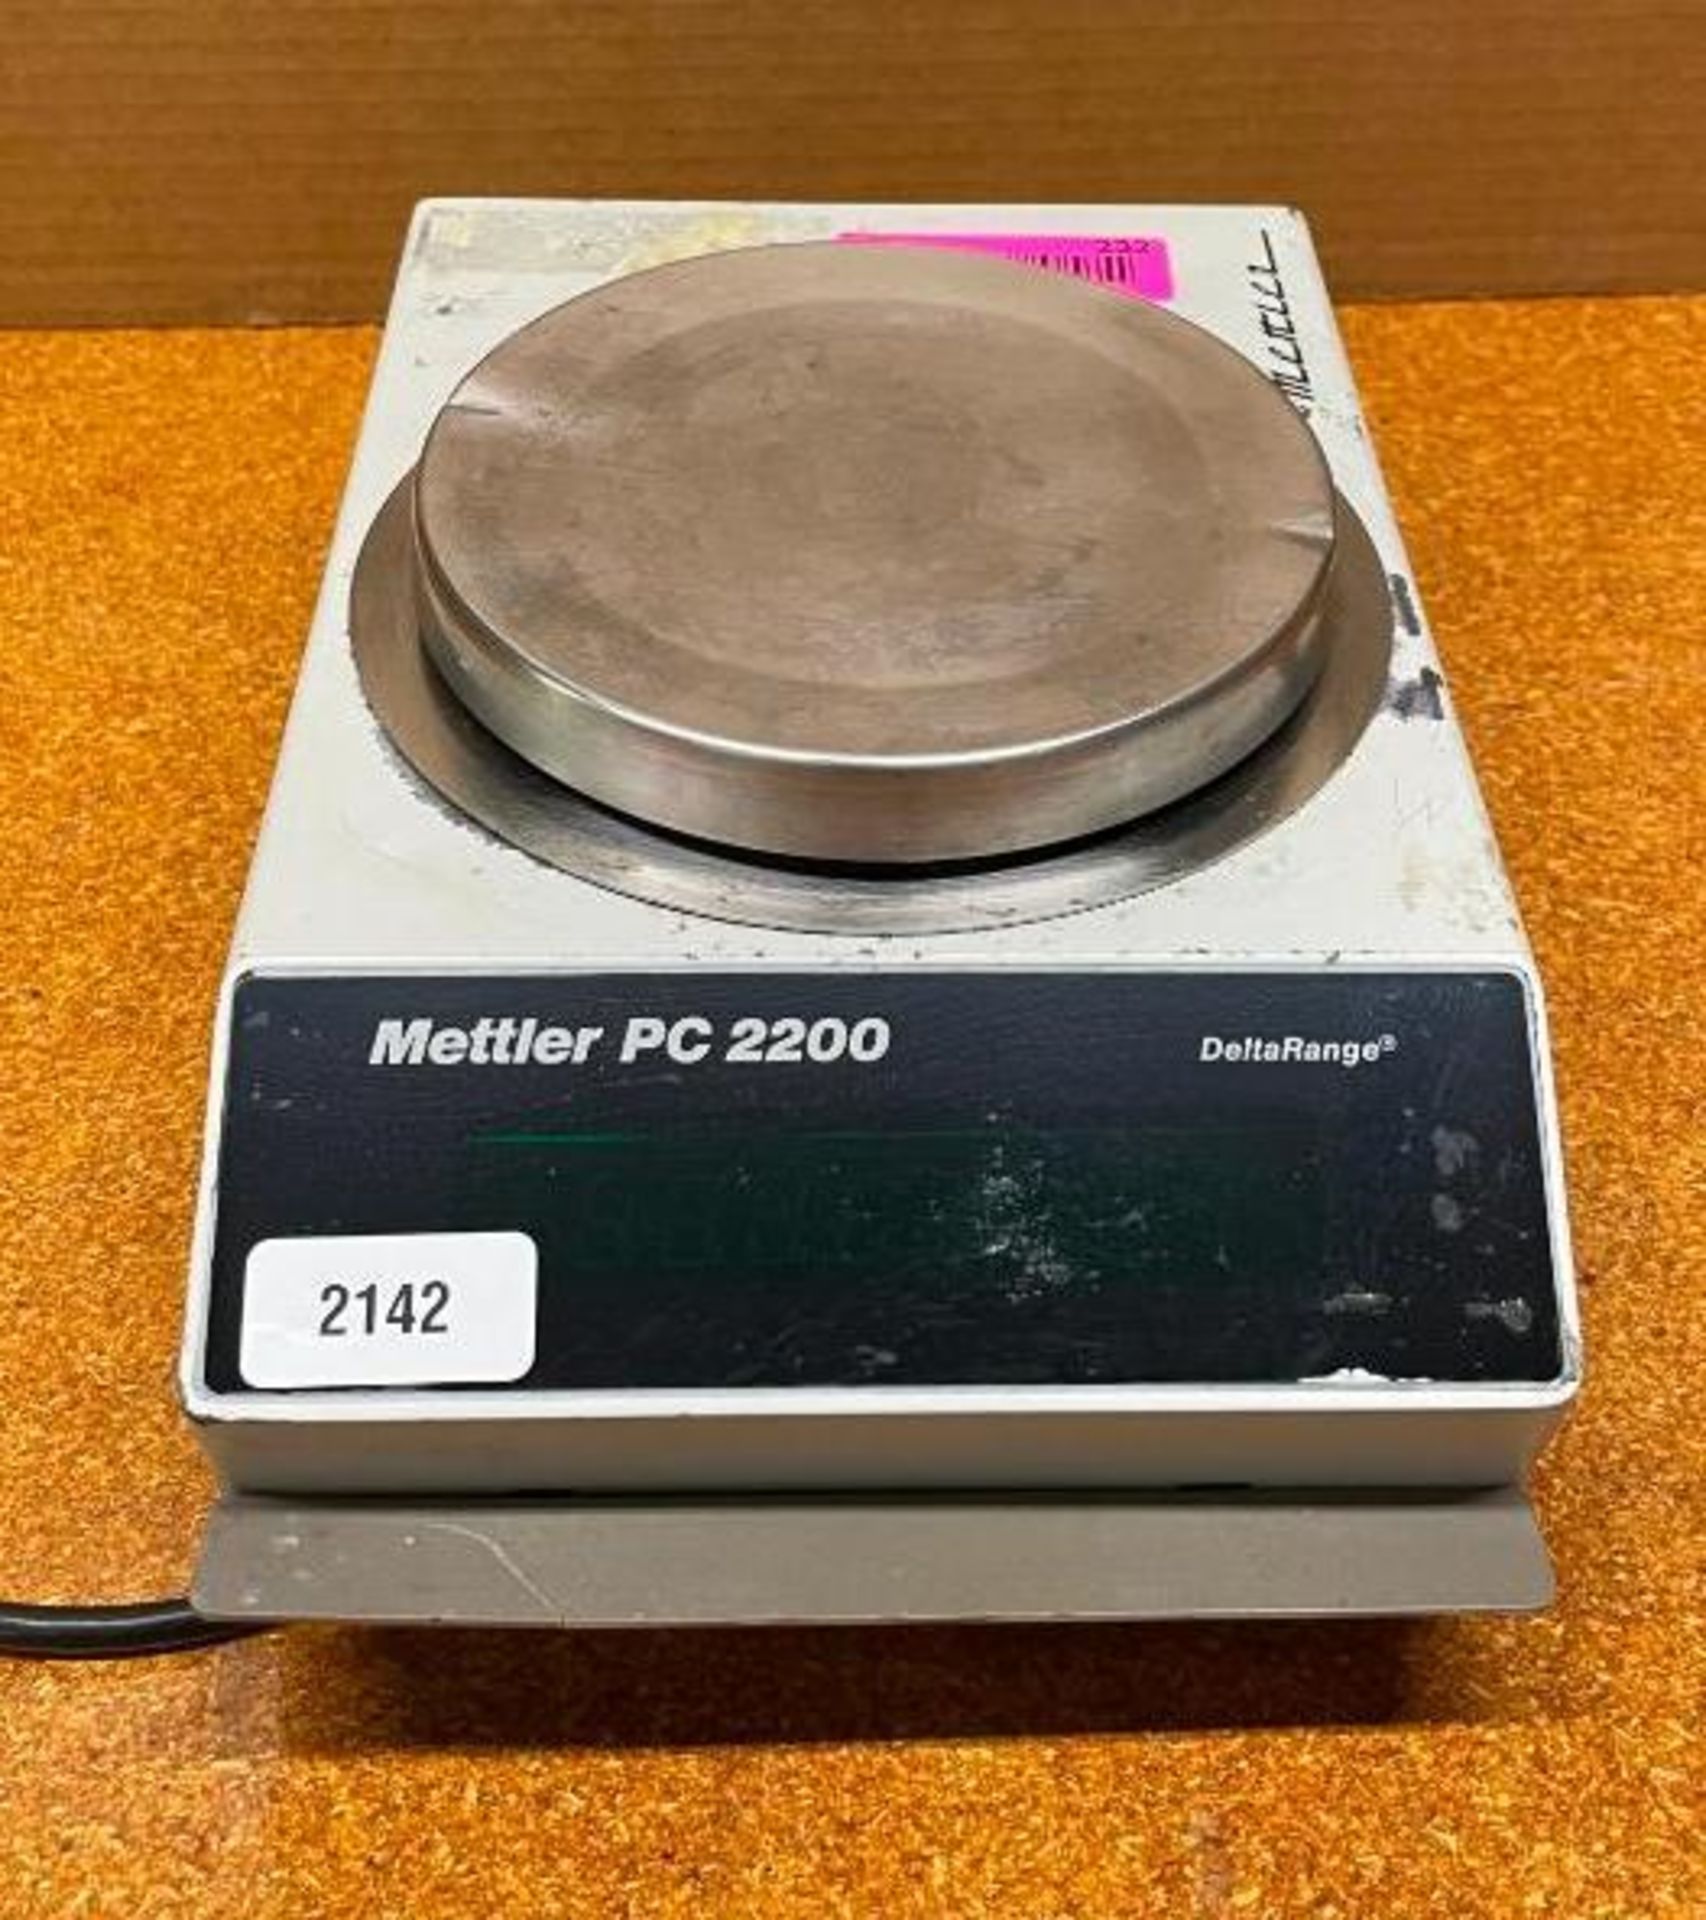 SCIENTIFIC ELECTRONIC BALANCE BRAND/MODEL: METTLER PC 2200 INFORMATION: DELTA RANGE QTY: 1